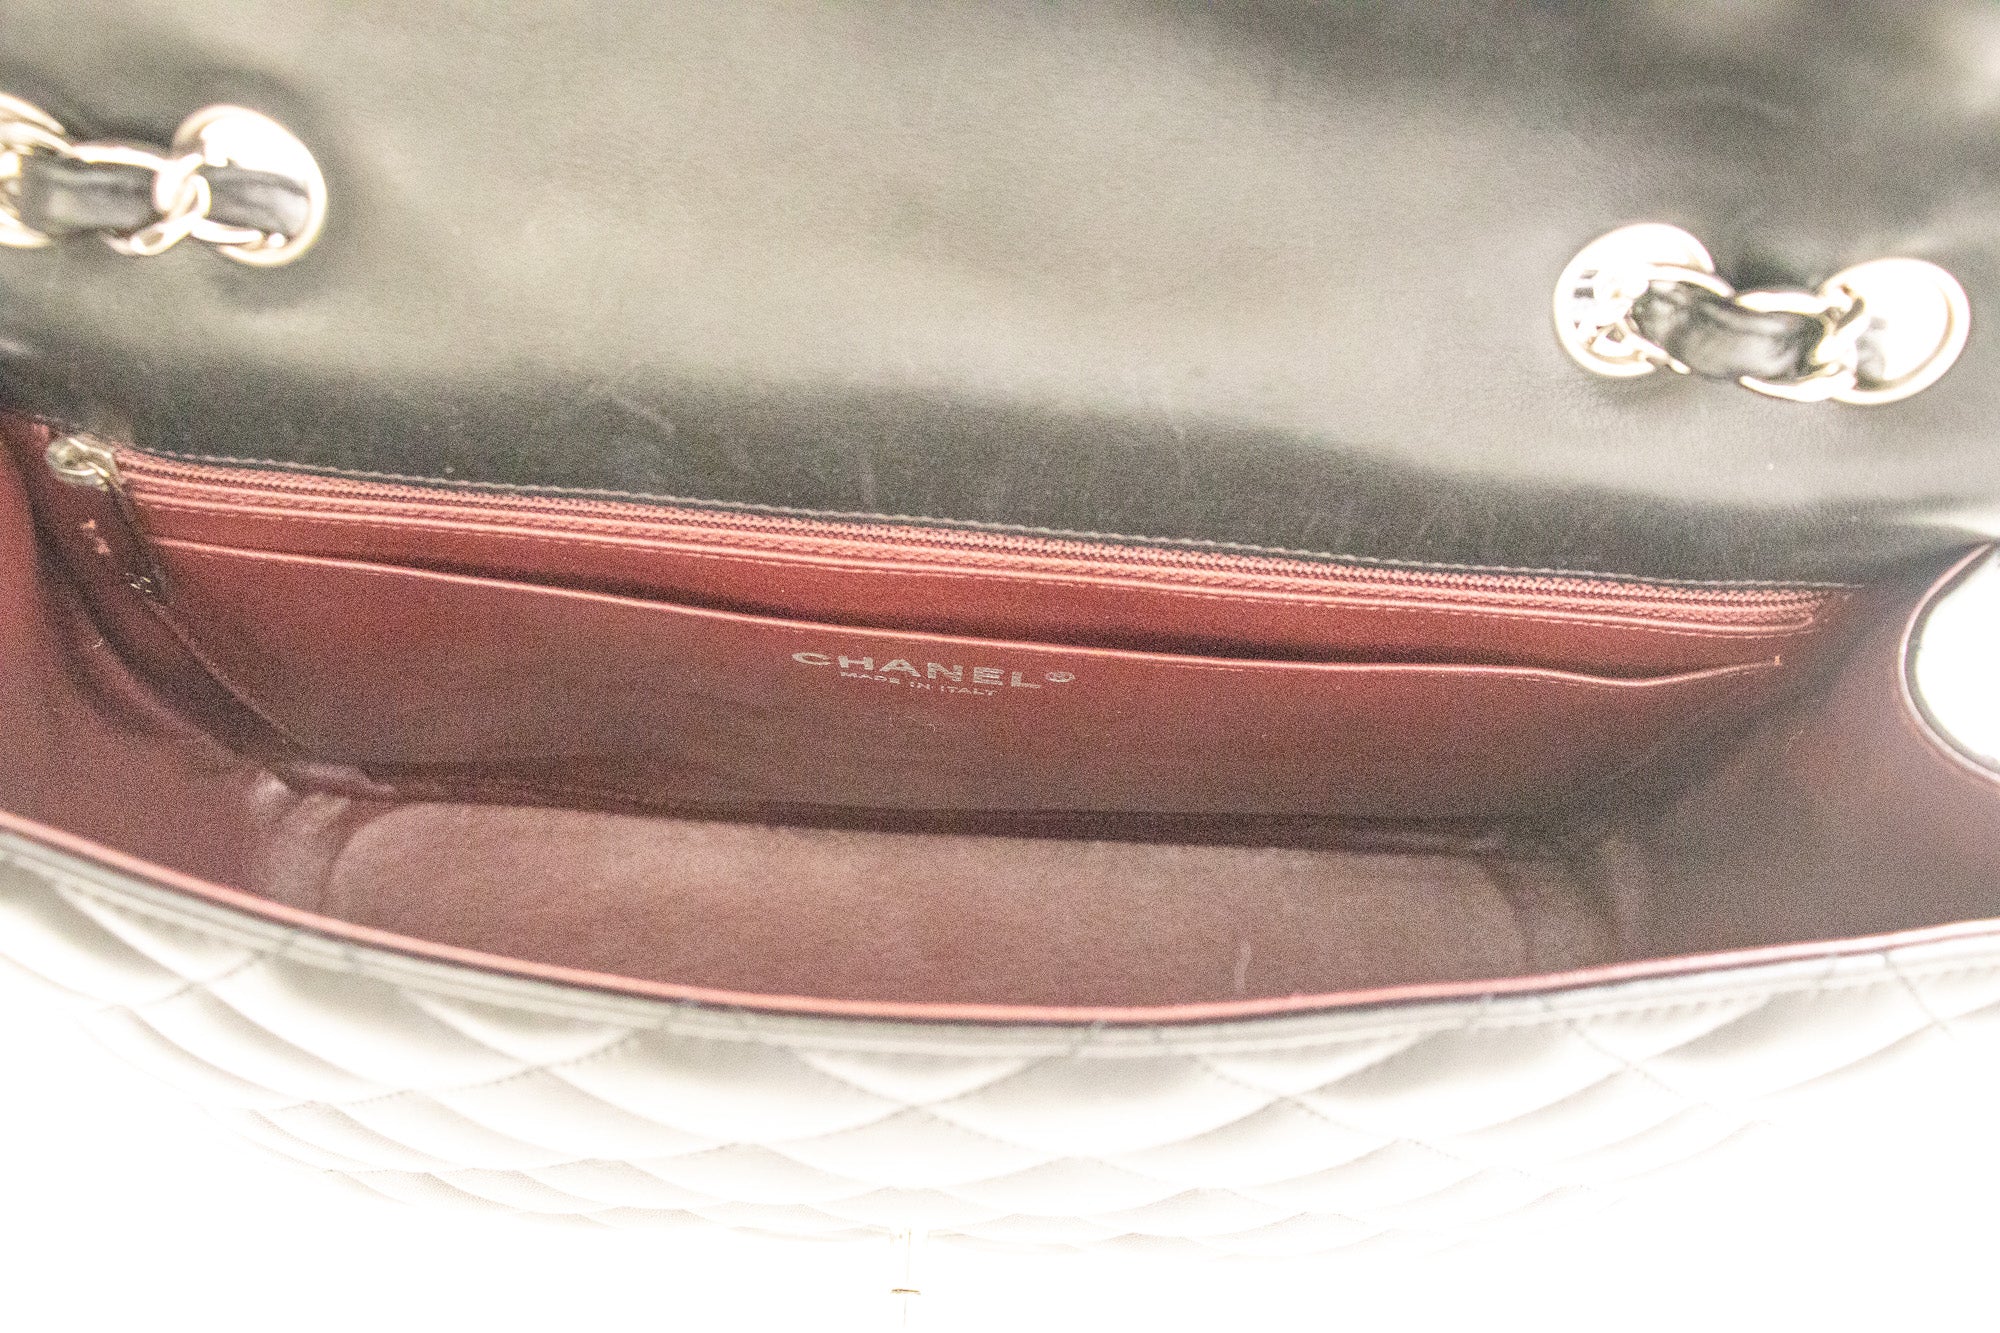 Chanel Classic Large Chain Shoulder Bag Flap